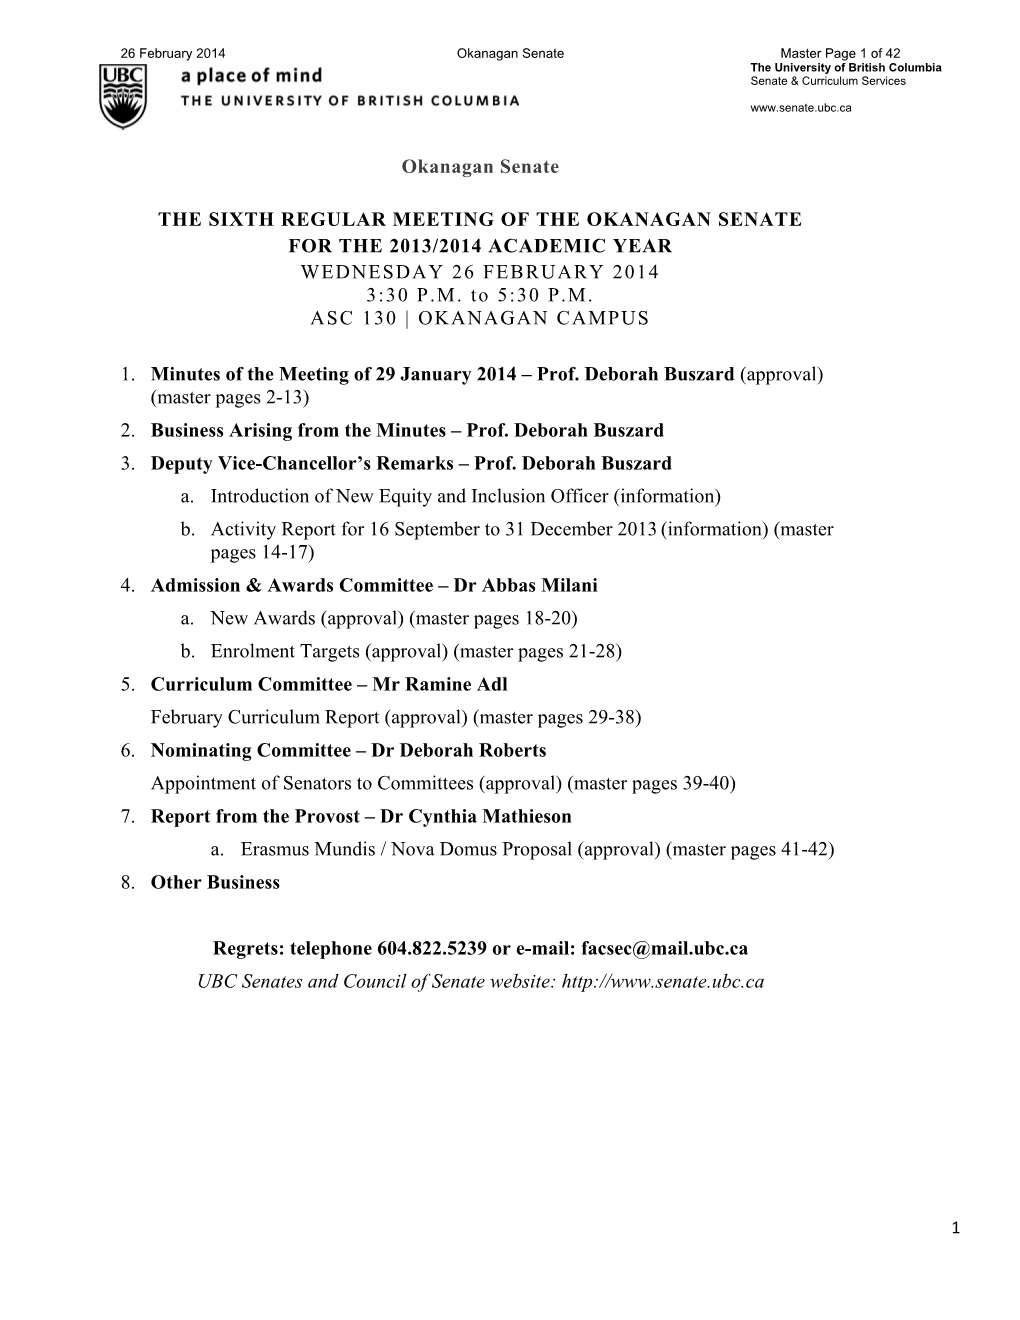 Okanagan Senate Master Page 1 of 42 the University of British Columbia Senate & Curriculum Services